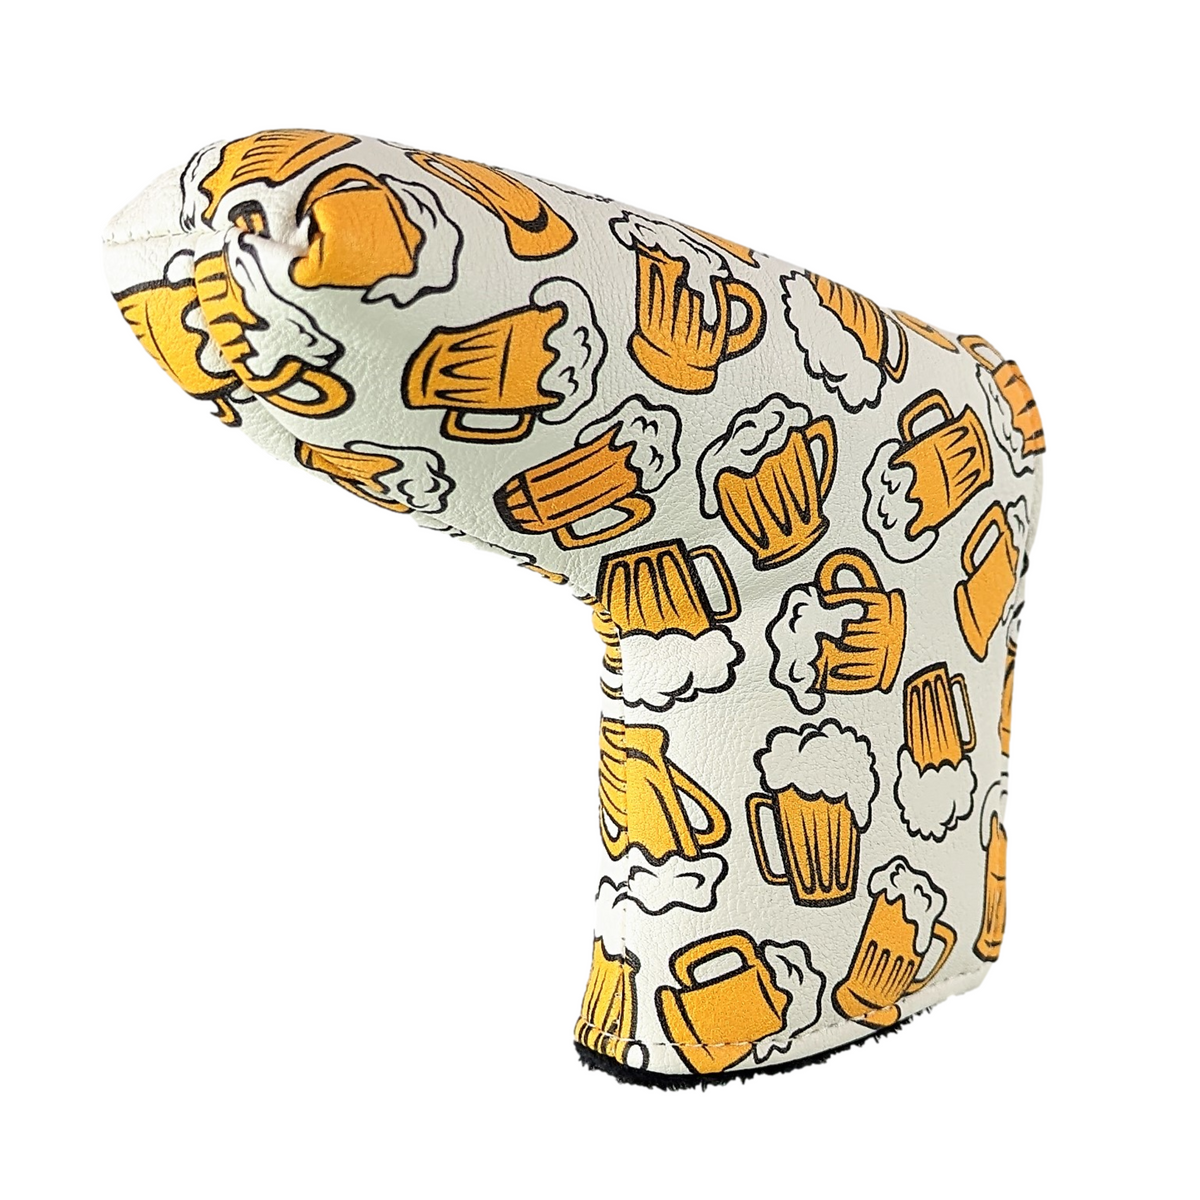 BEER MUGS Pattern - BLADE Putter Headcover